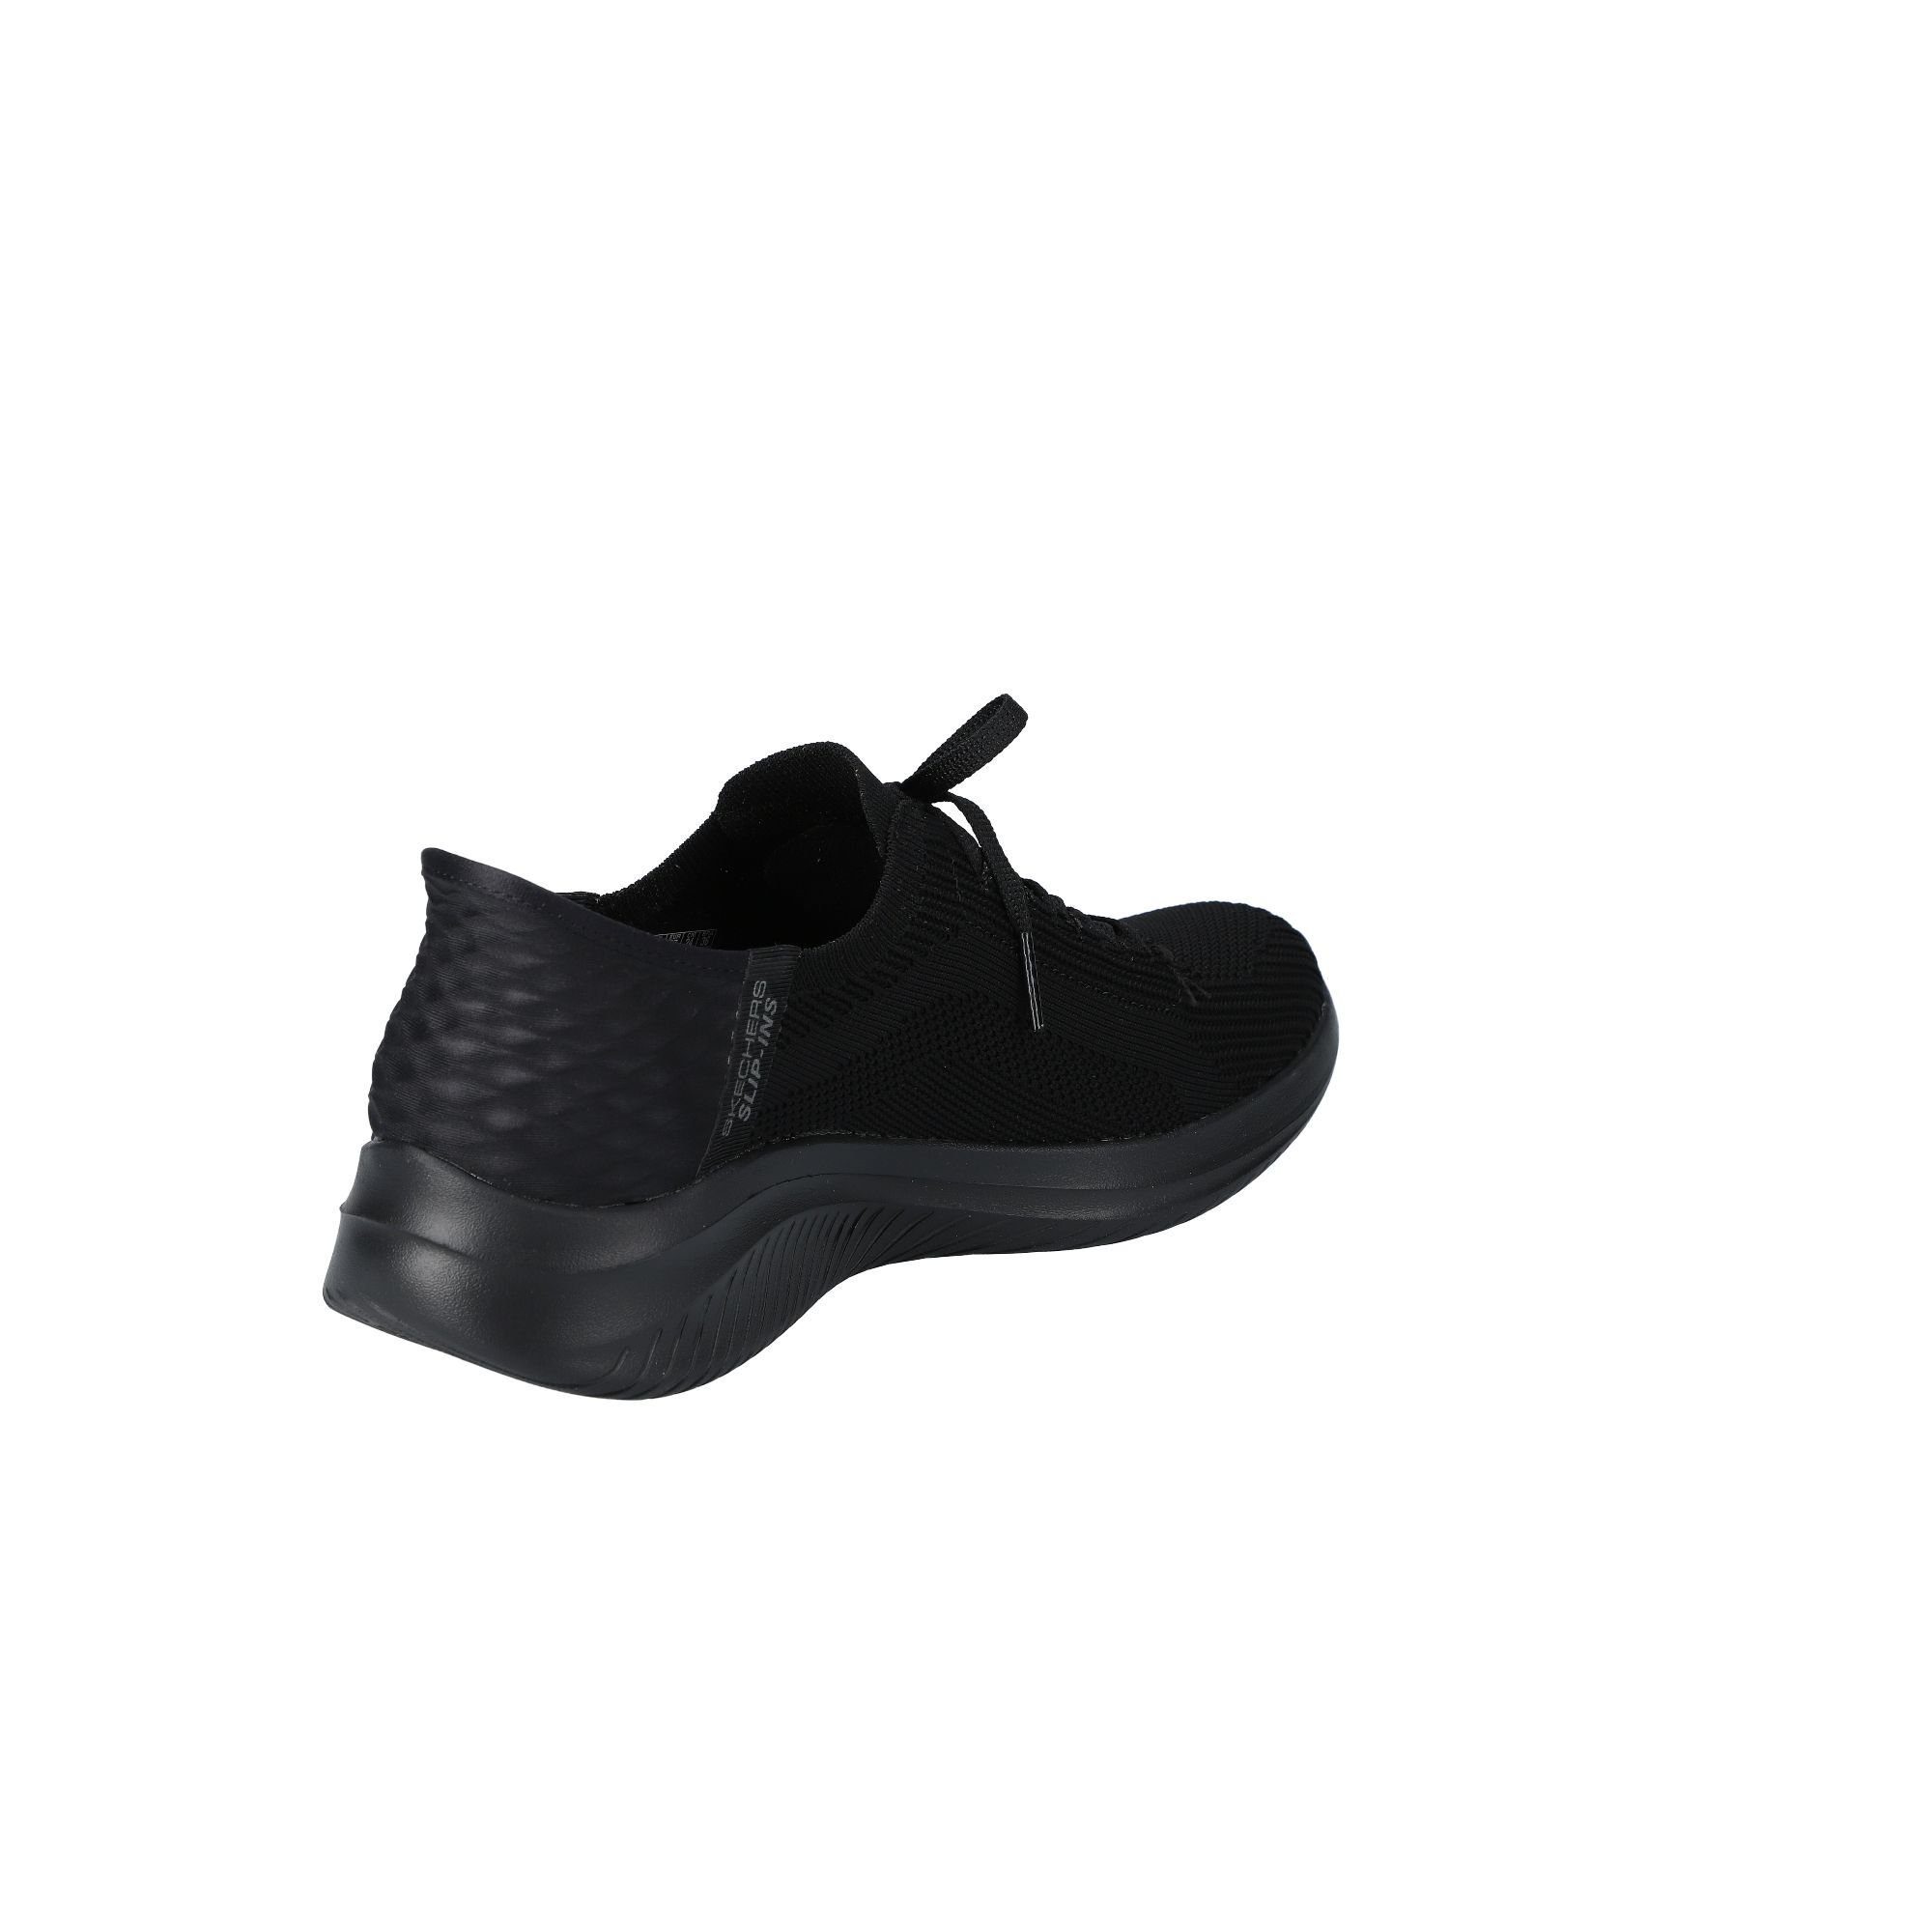 Skechers ULTRA FLEX 3.0 PATH black - BRILLIANT Sneaker